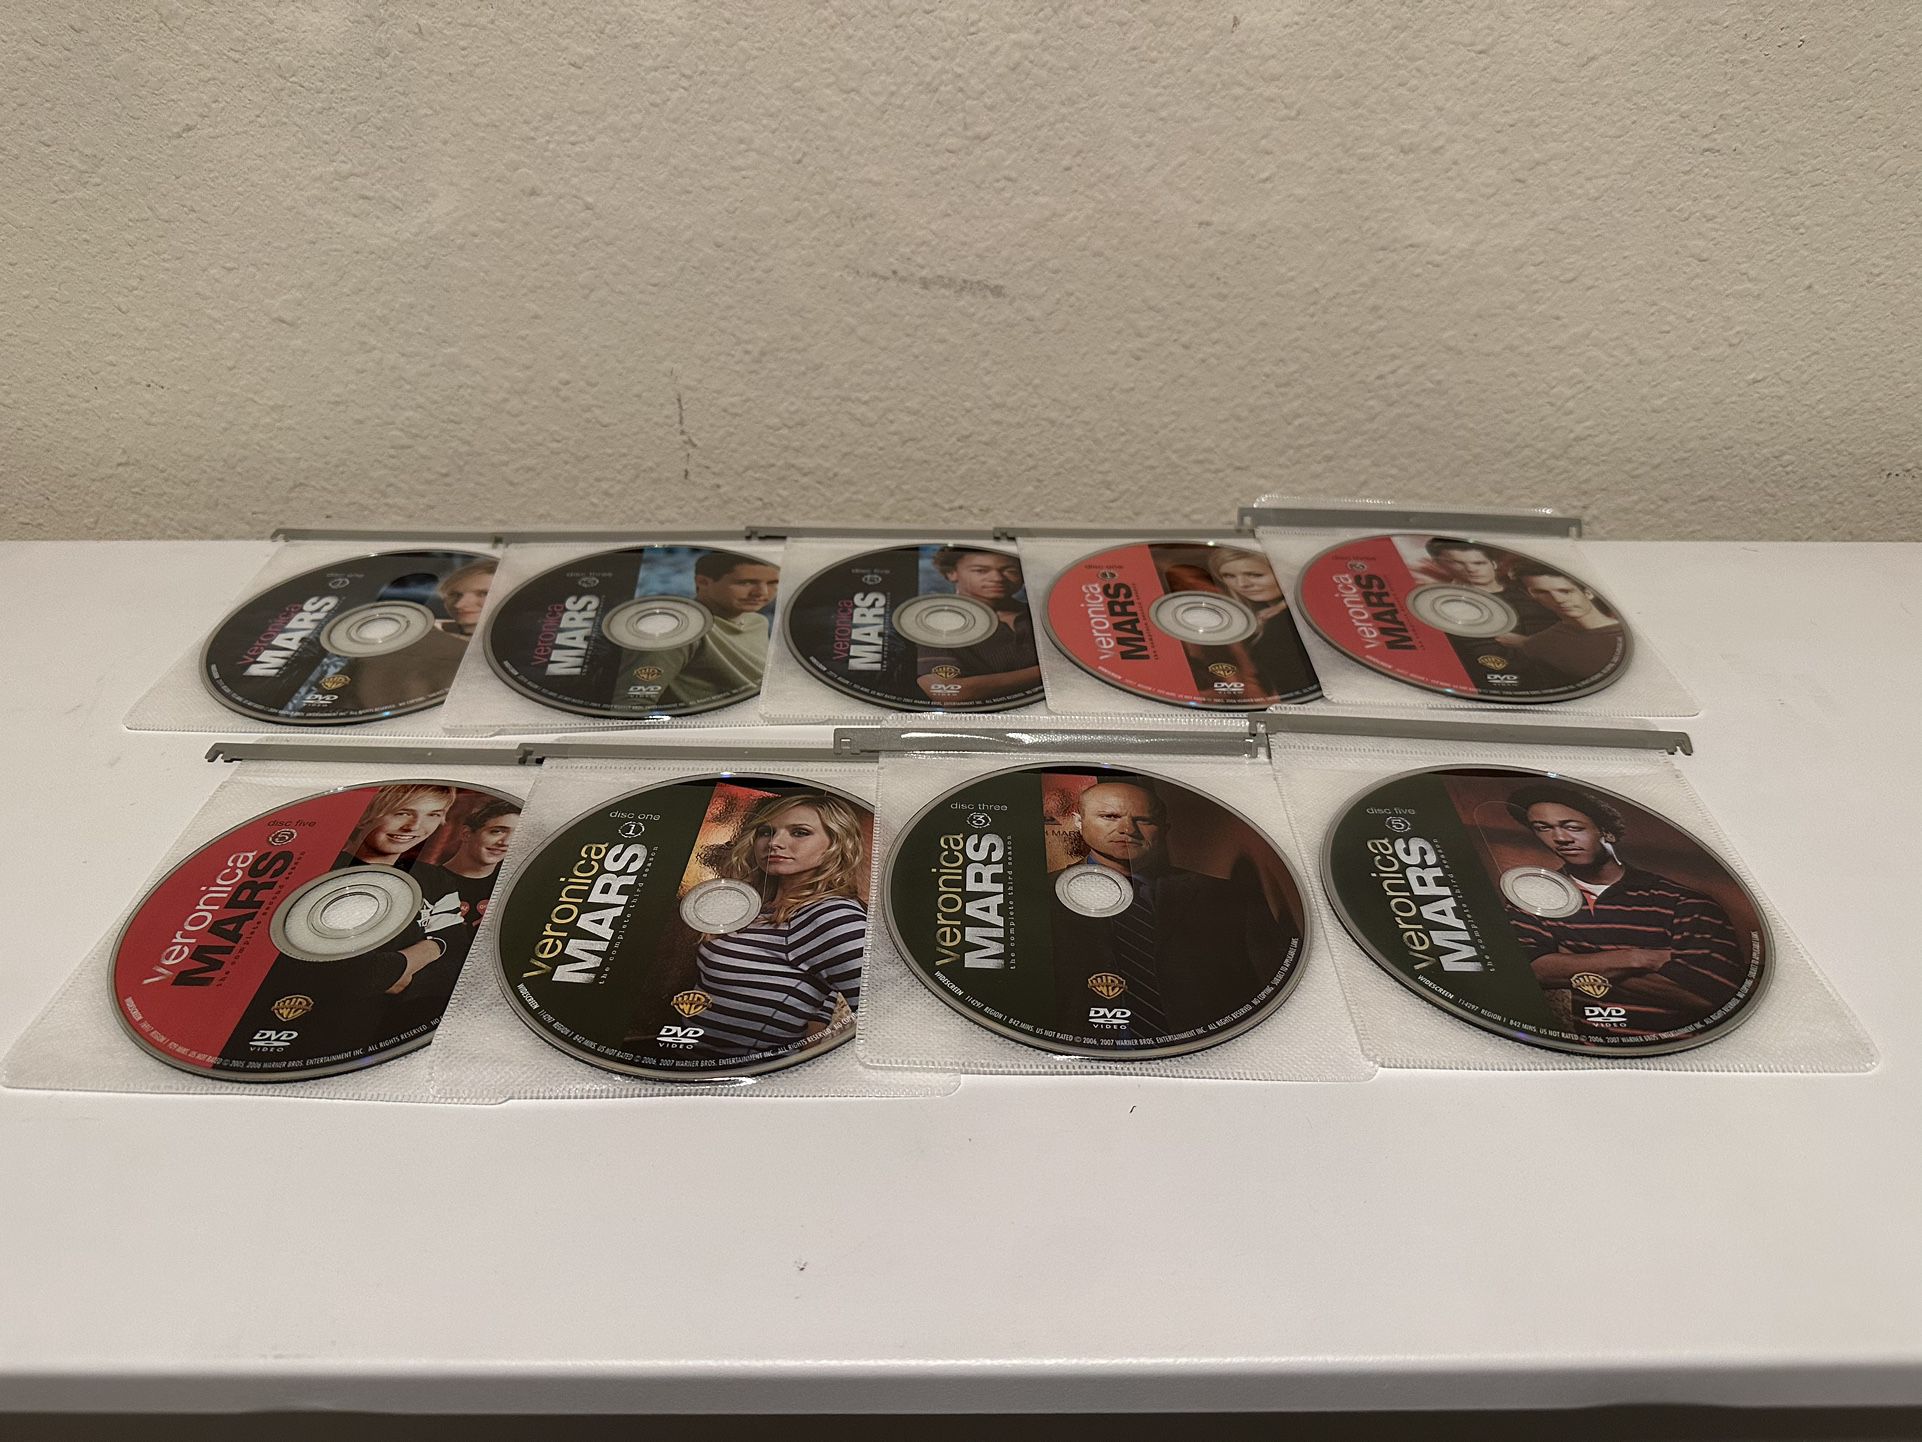  Veronica Mars TV Series Season 1-3 (DVD)